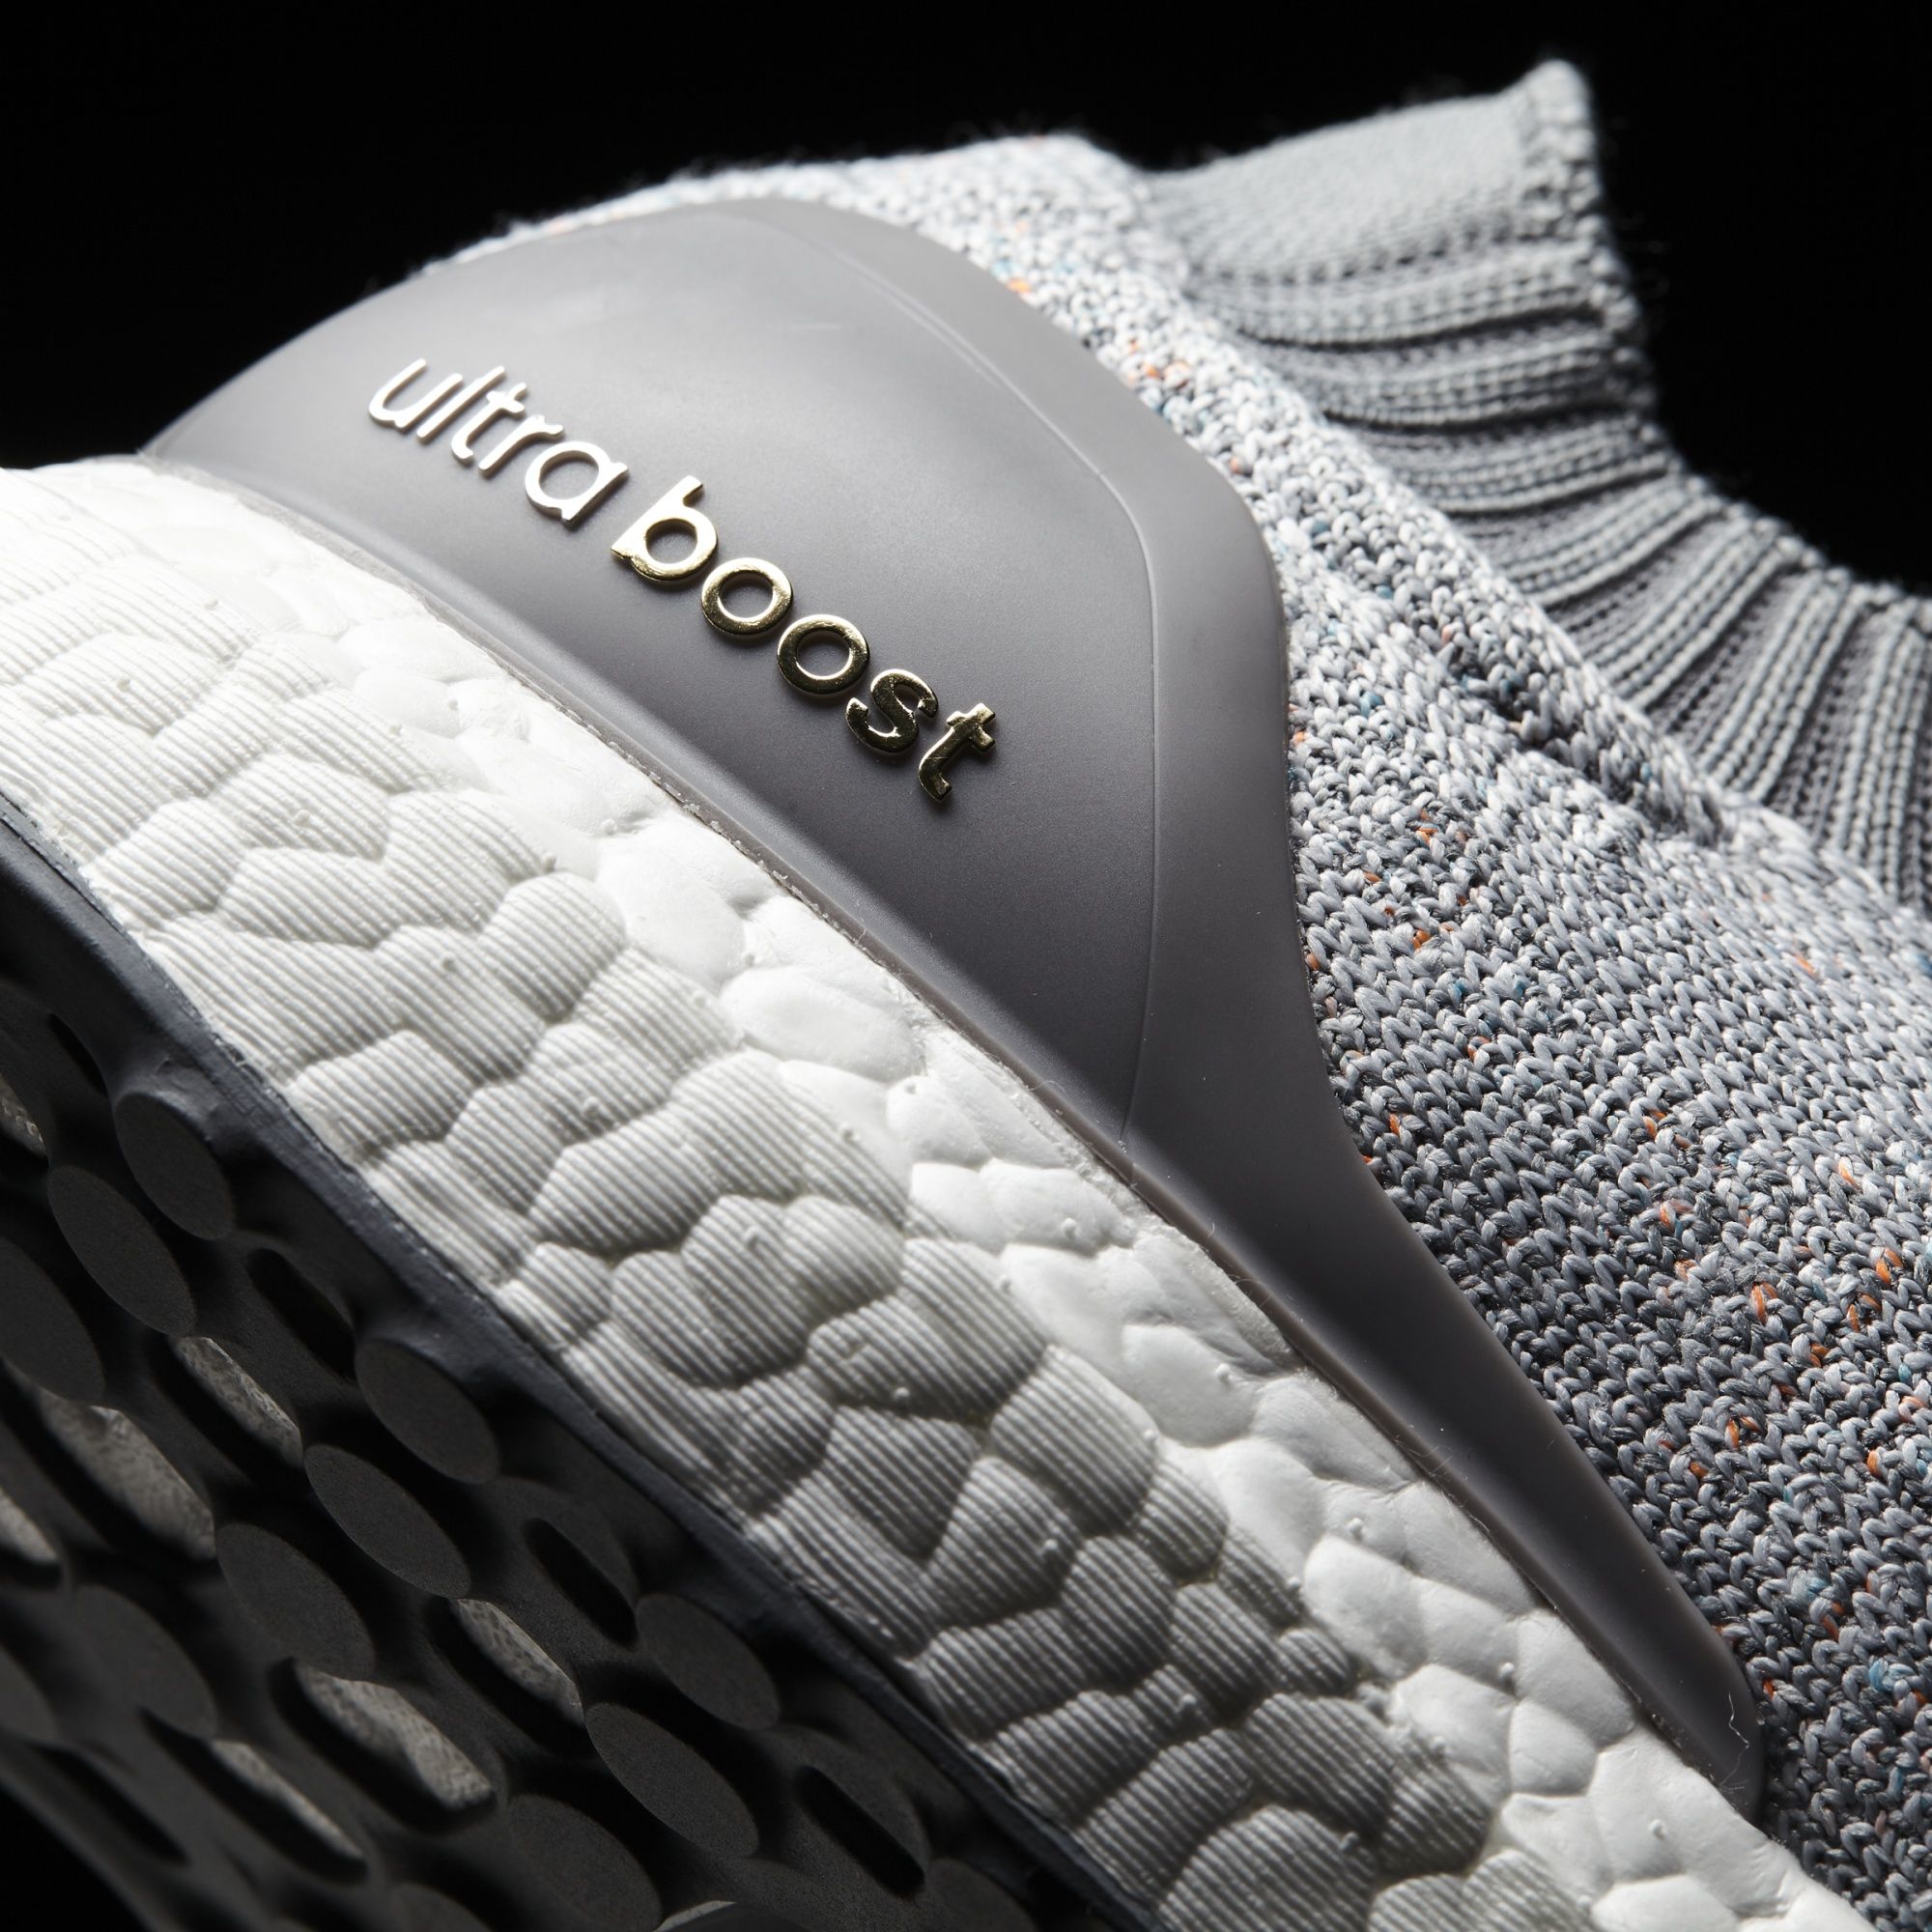 Adidas Ultra Boost Uncaged
Light Grey / White